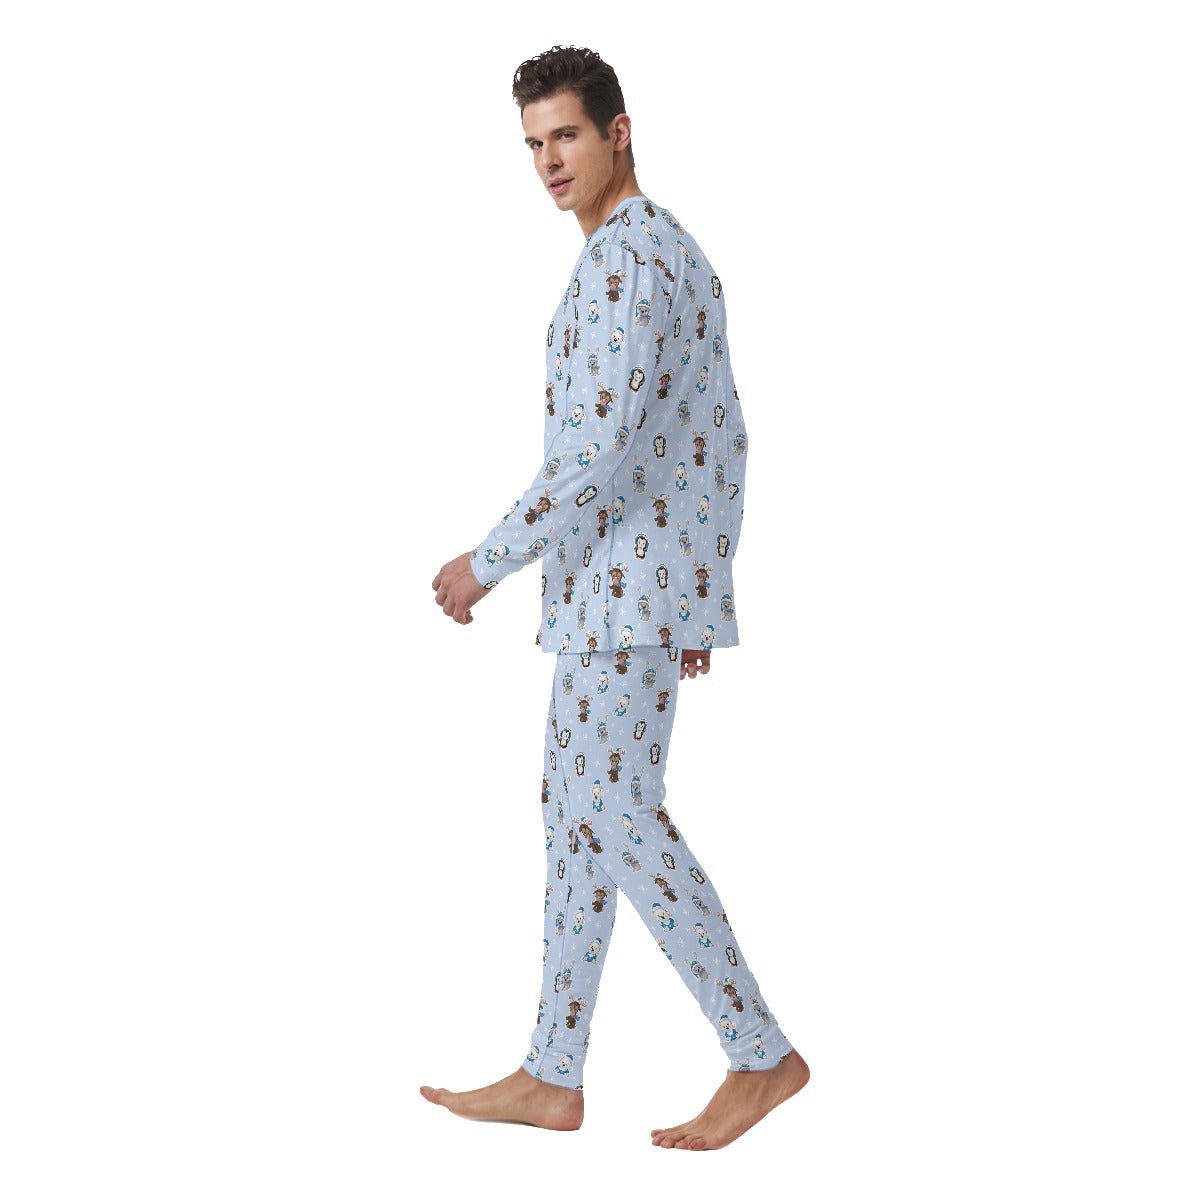 Men's Christmas Pyjamas - Polar Blue - Festive Style